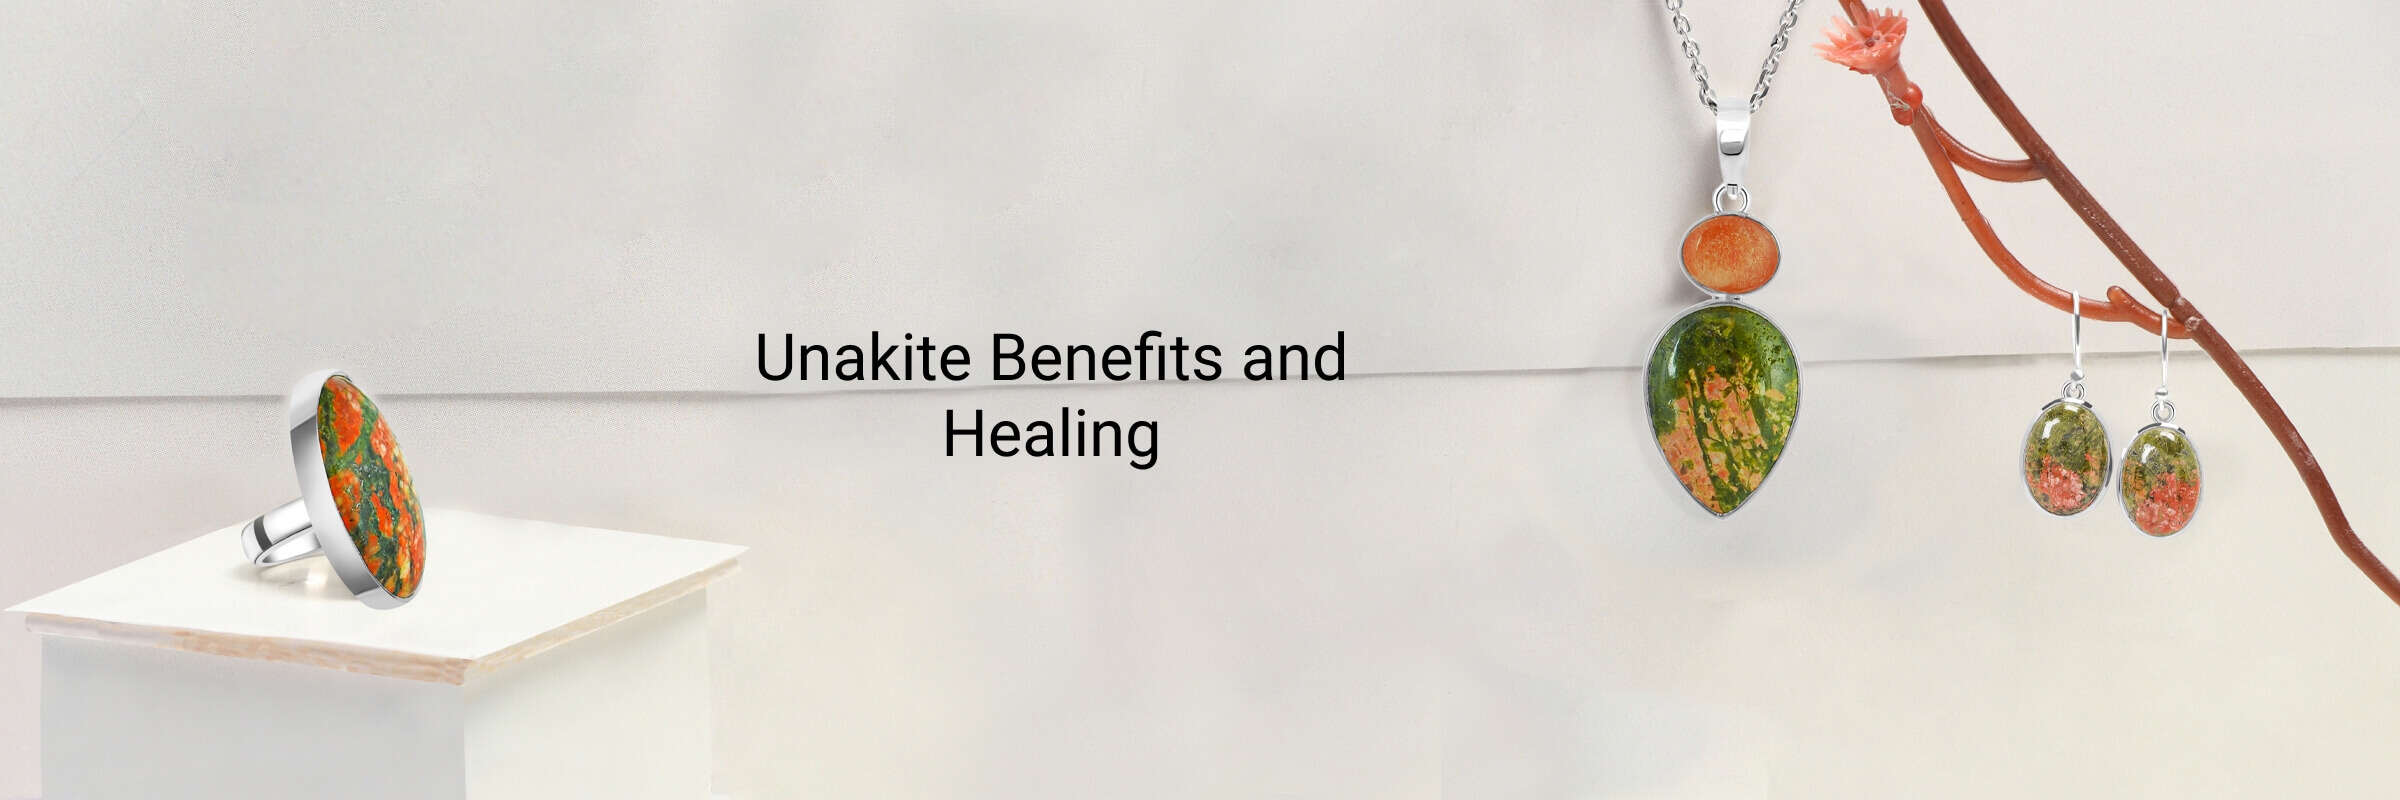 Benefits And Healing Properties Of Unakite